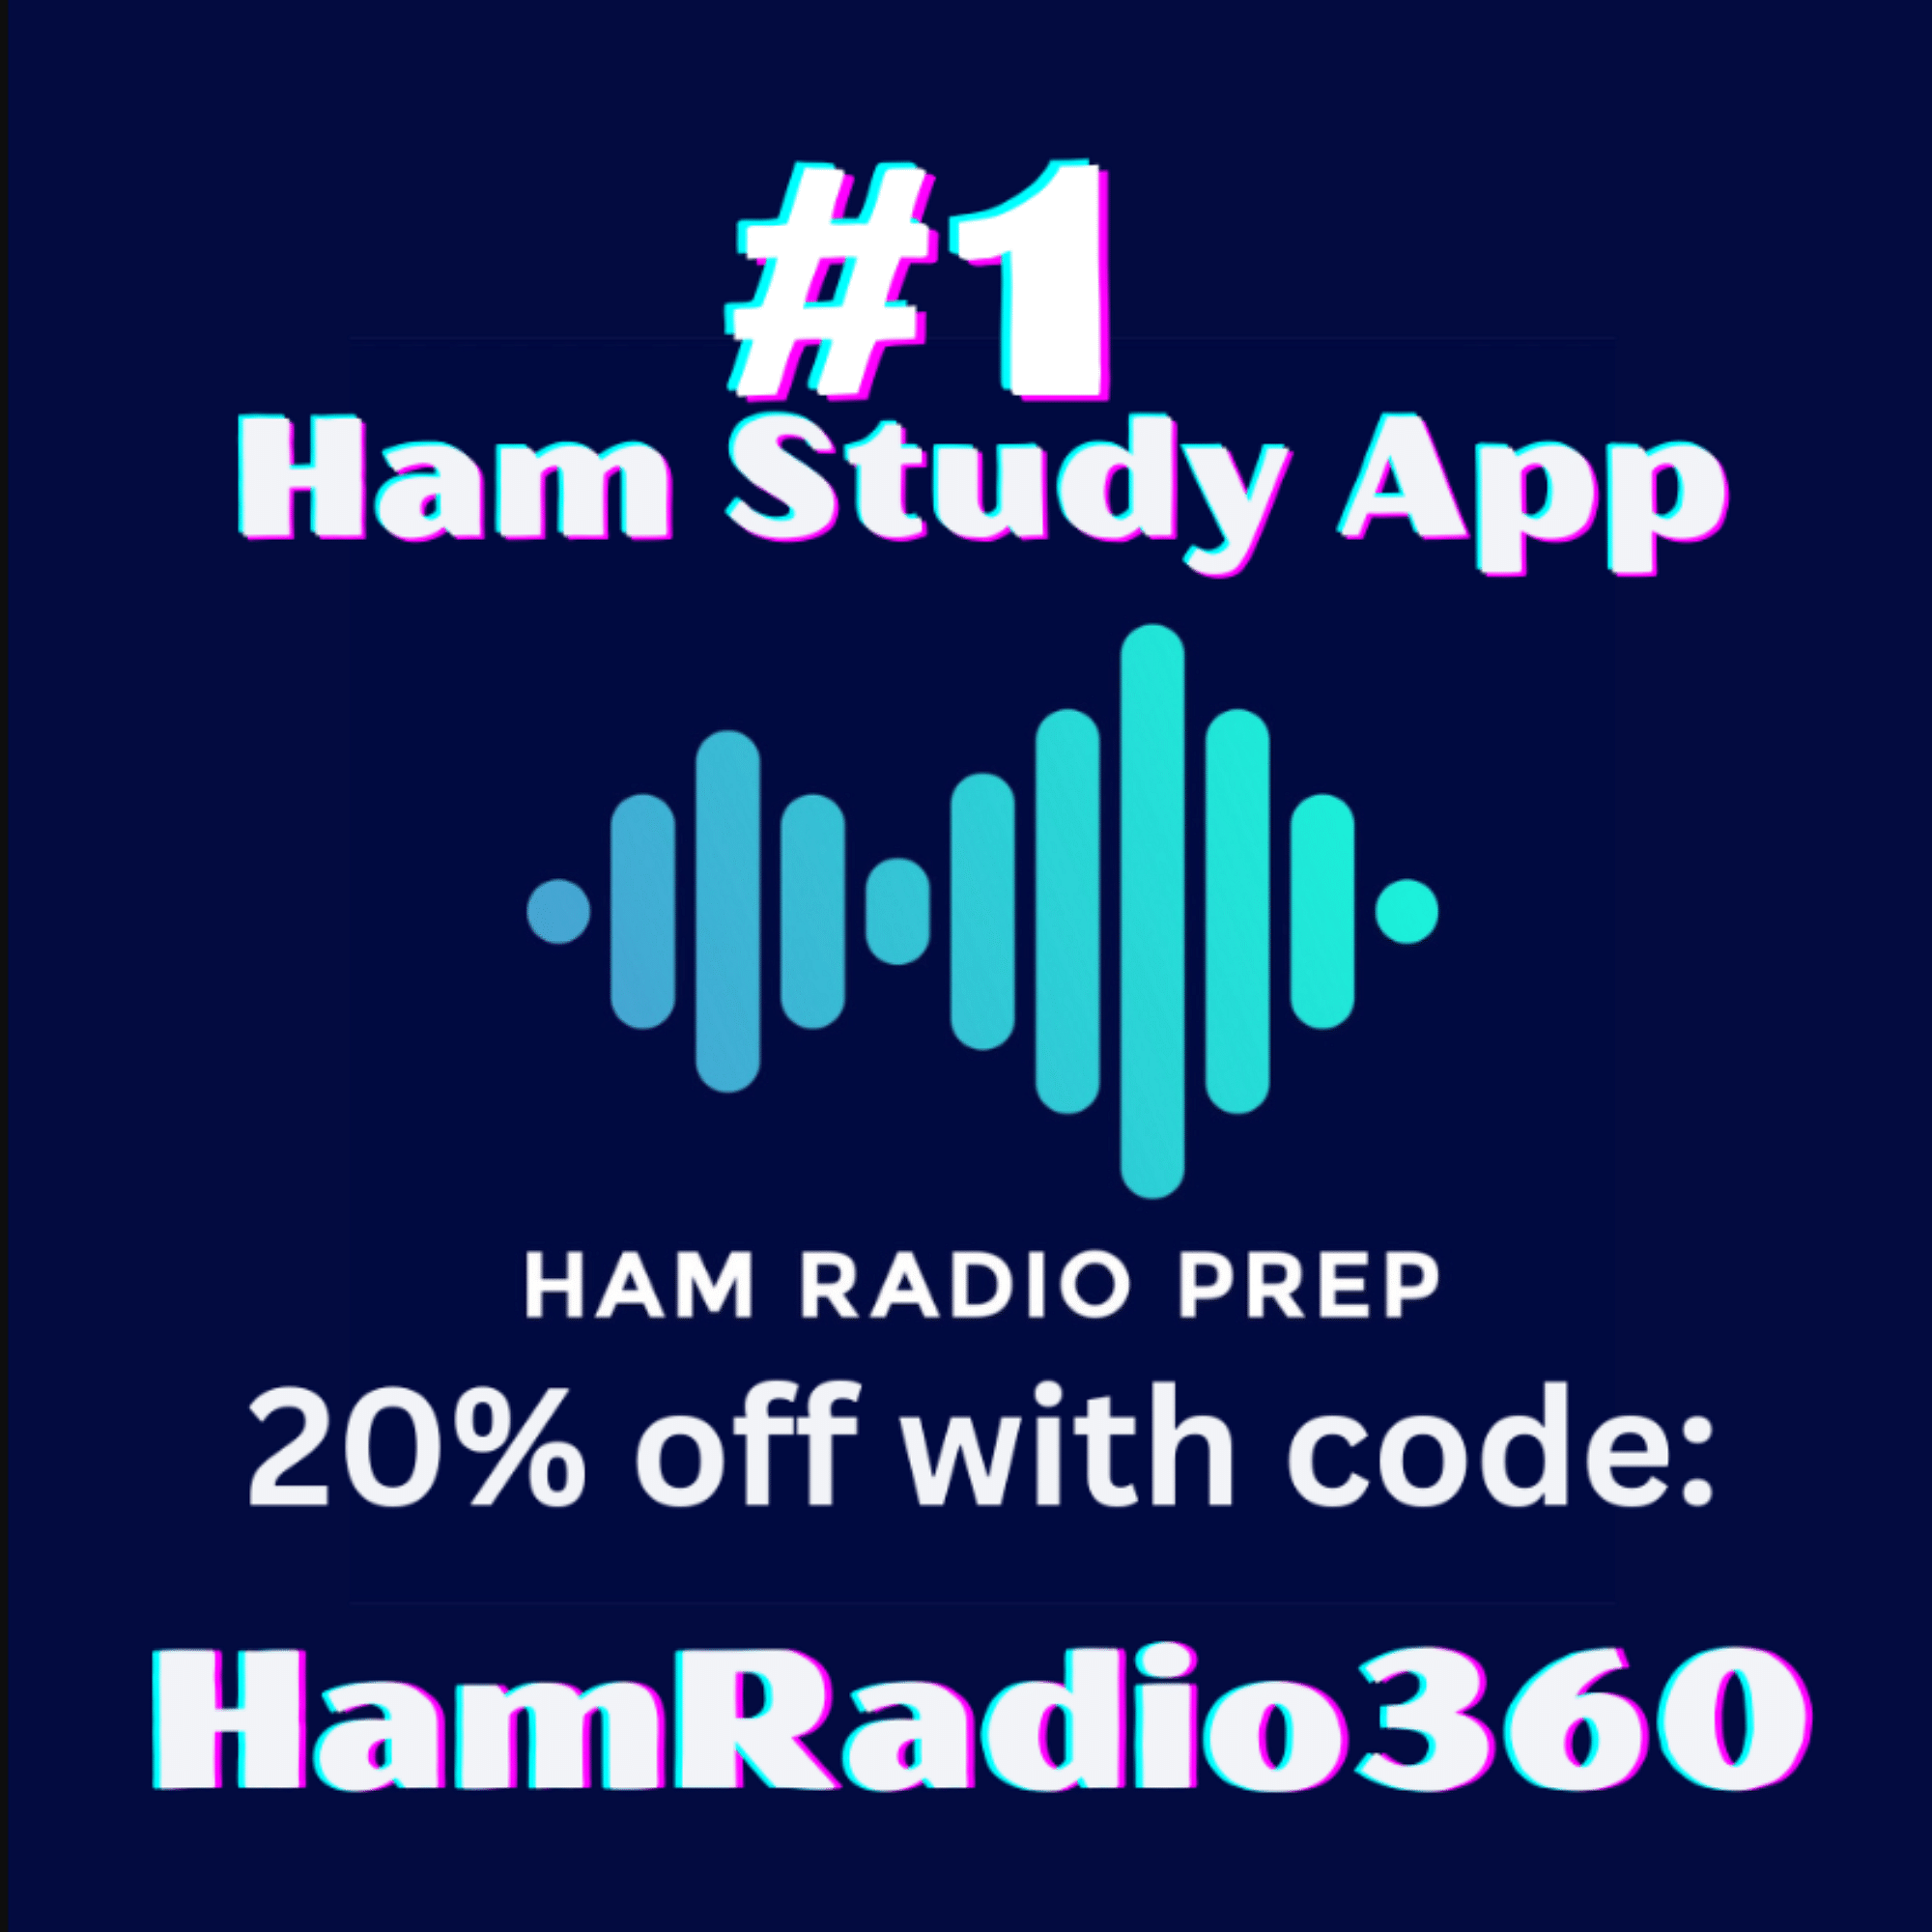 ham radio prep logo and code